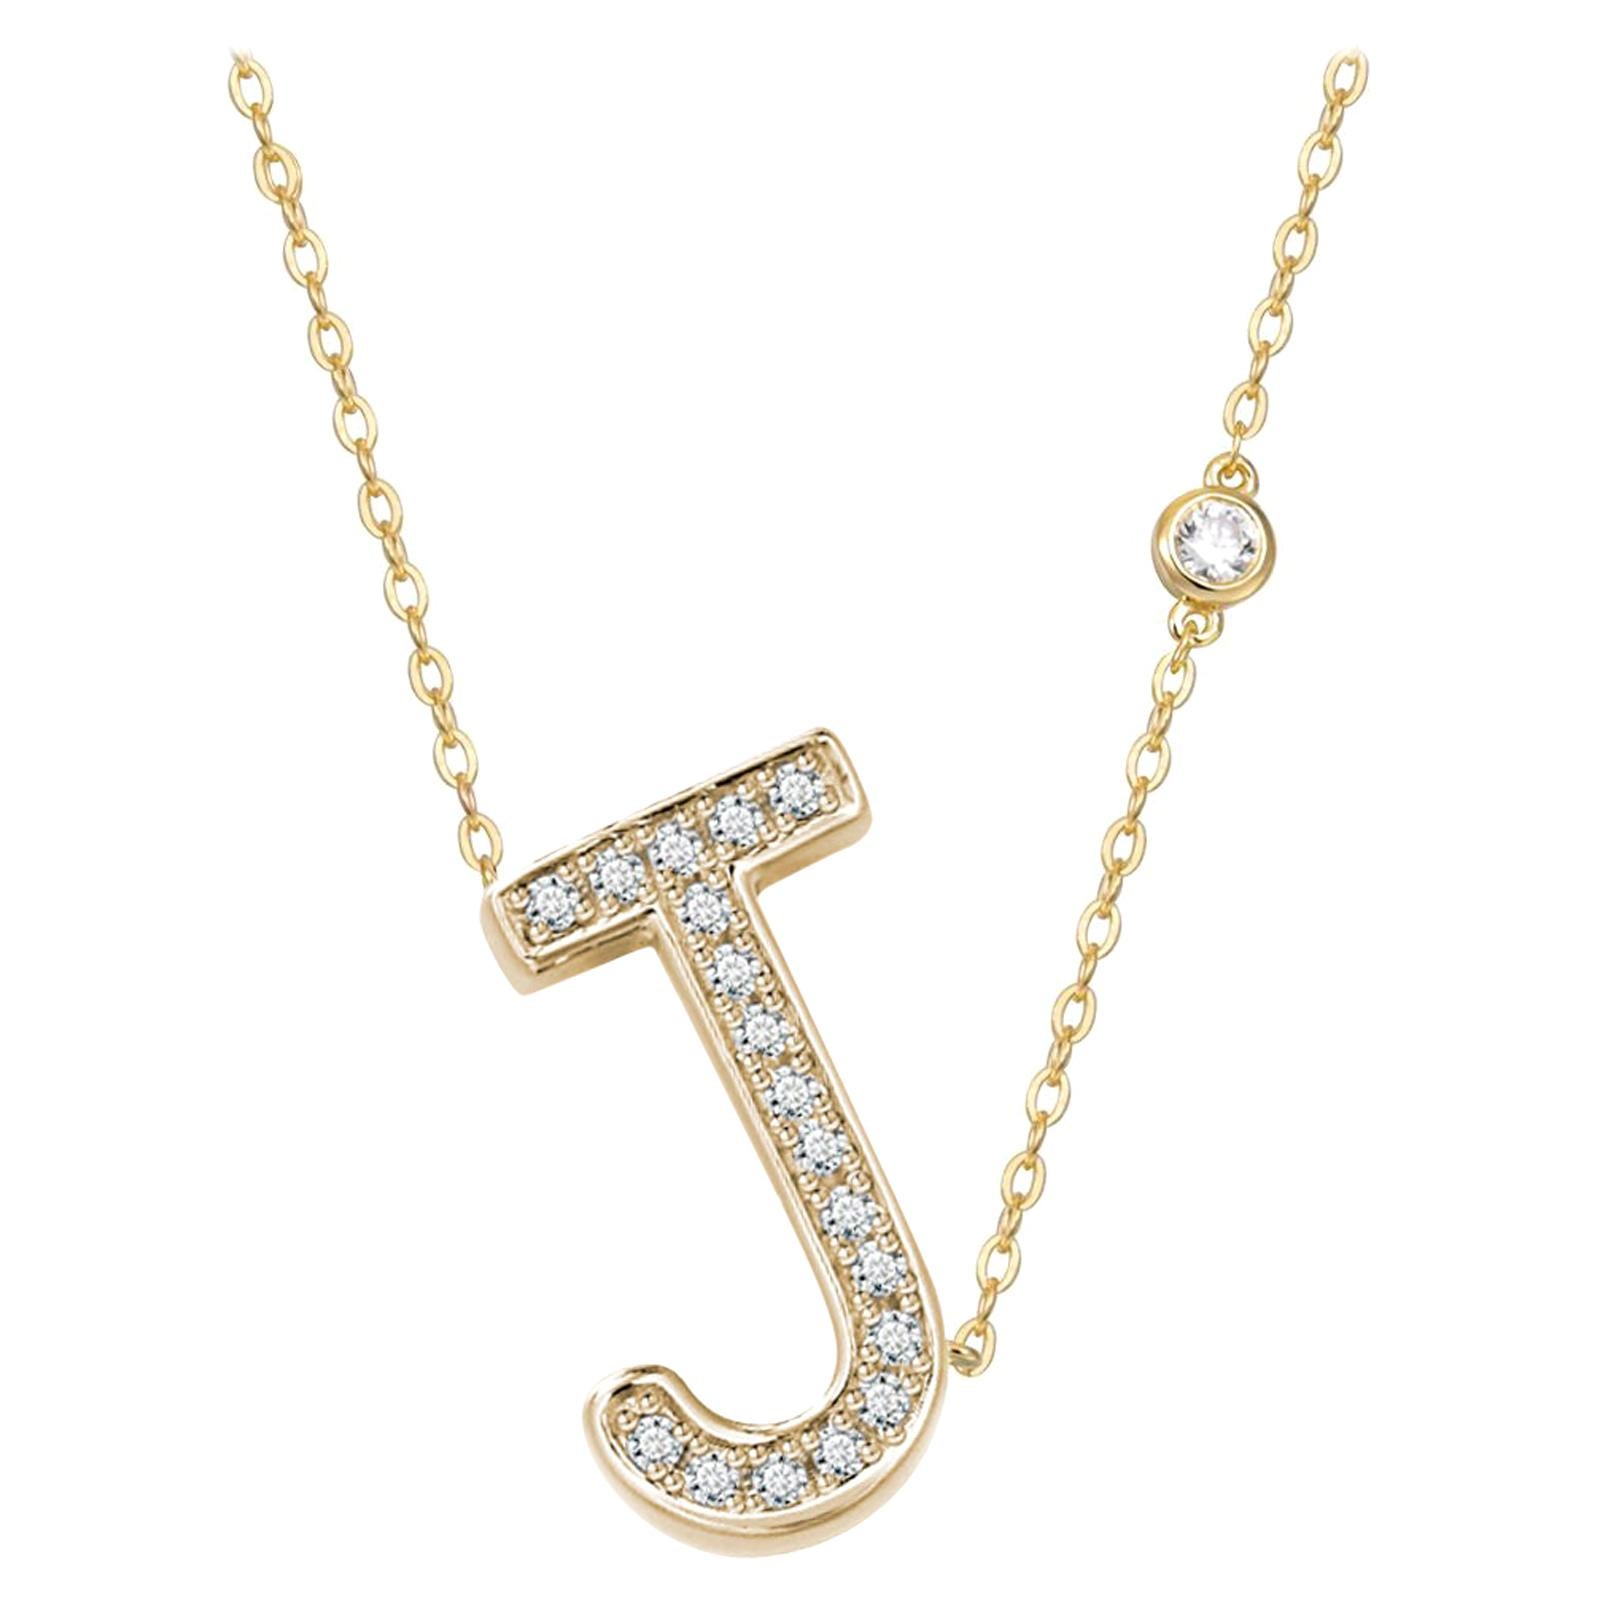 J Initial Bezel Chain Necklace